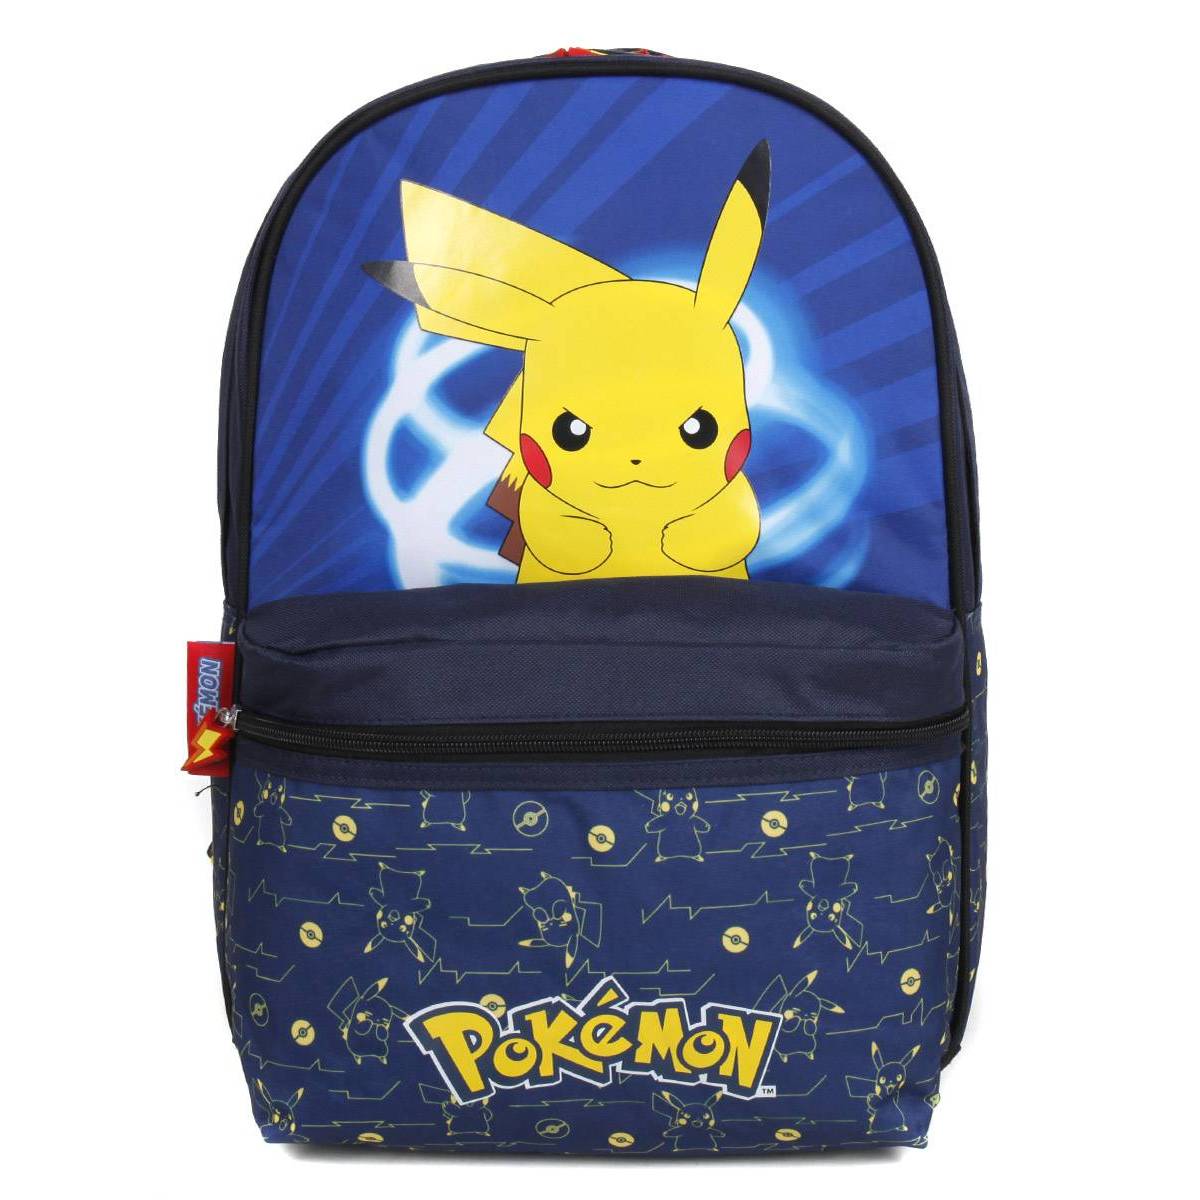 https://www.maxxidiscount.com/29676-large_default/pokemon-pikachu-backpack-43-cm-2-compartments.jpg